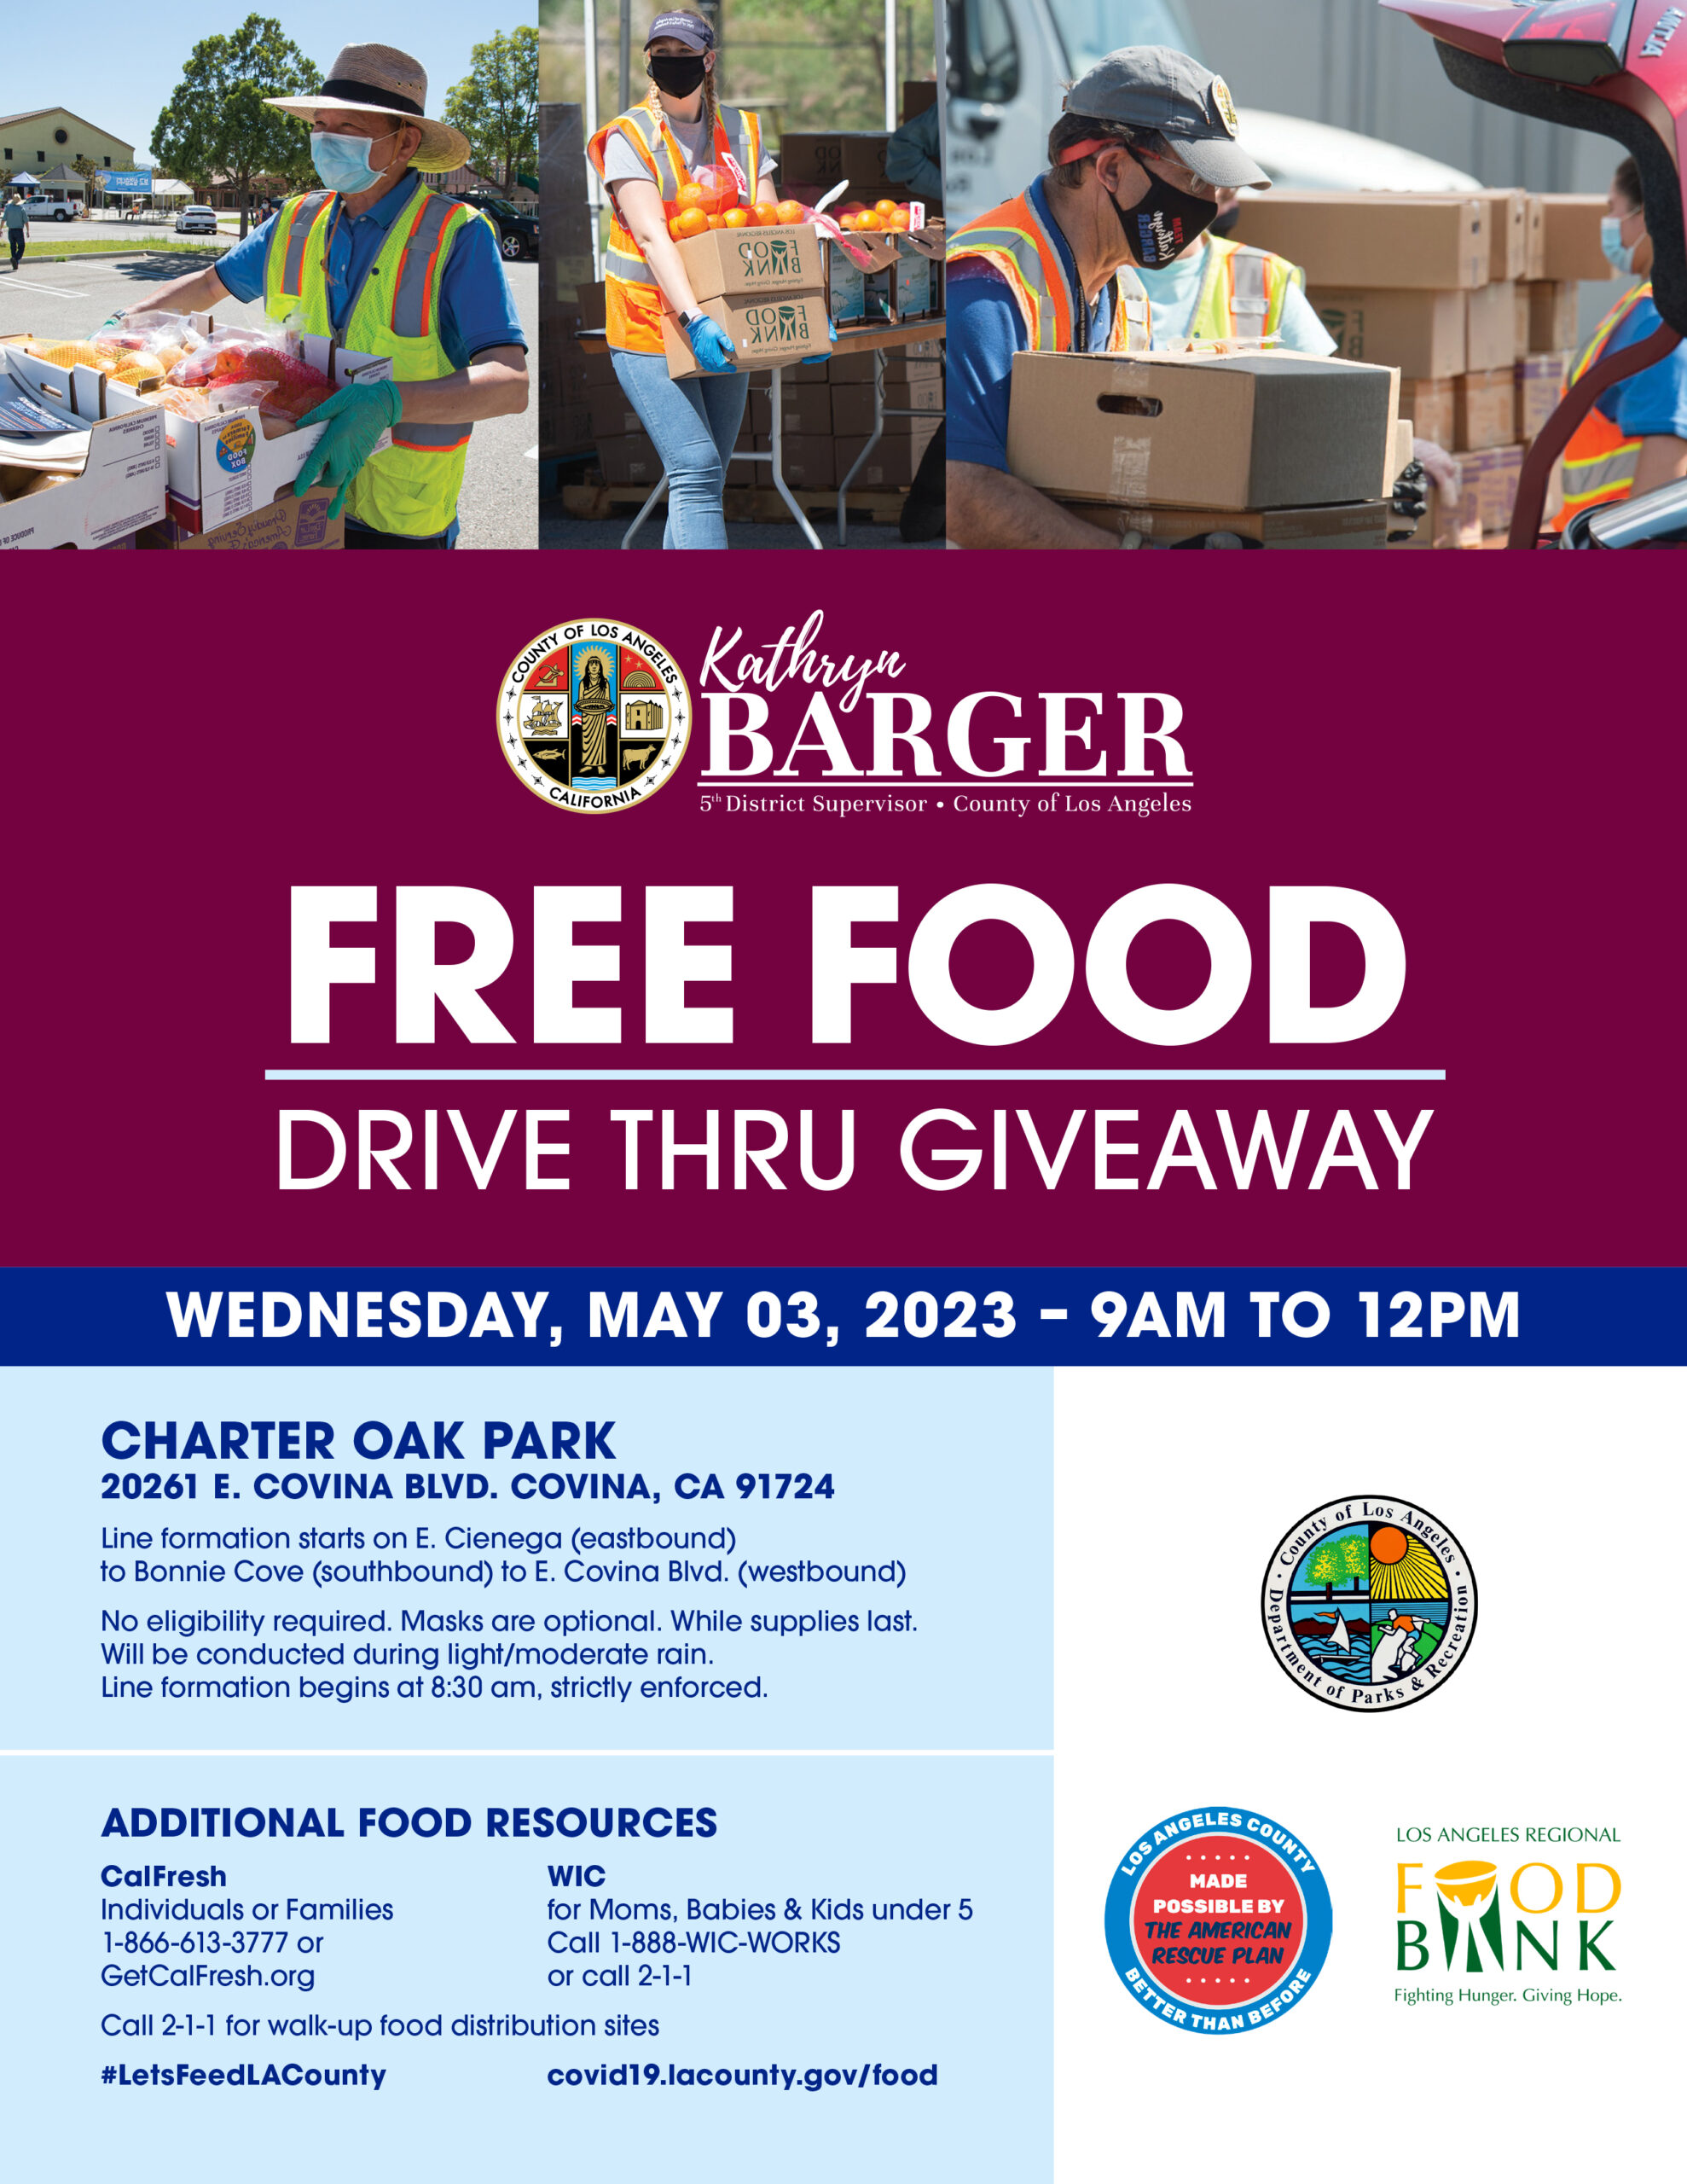 Kathryn Barger free food drive thru giveaway